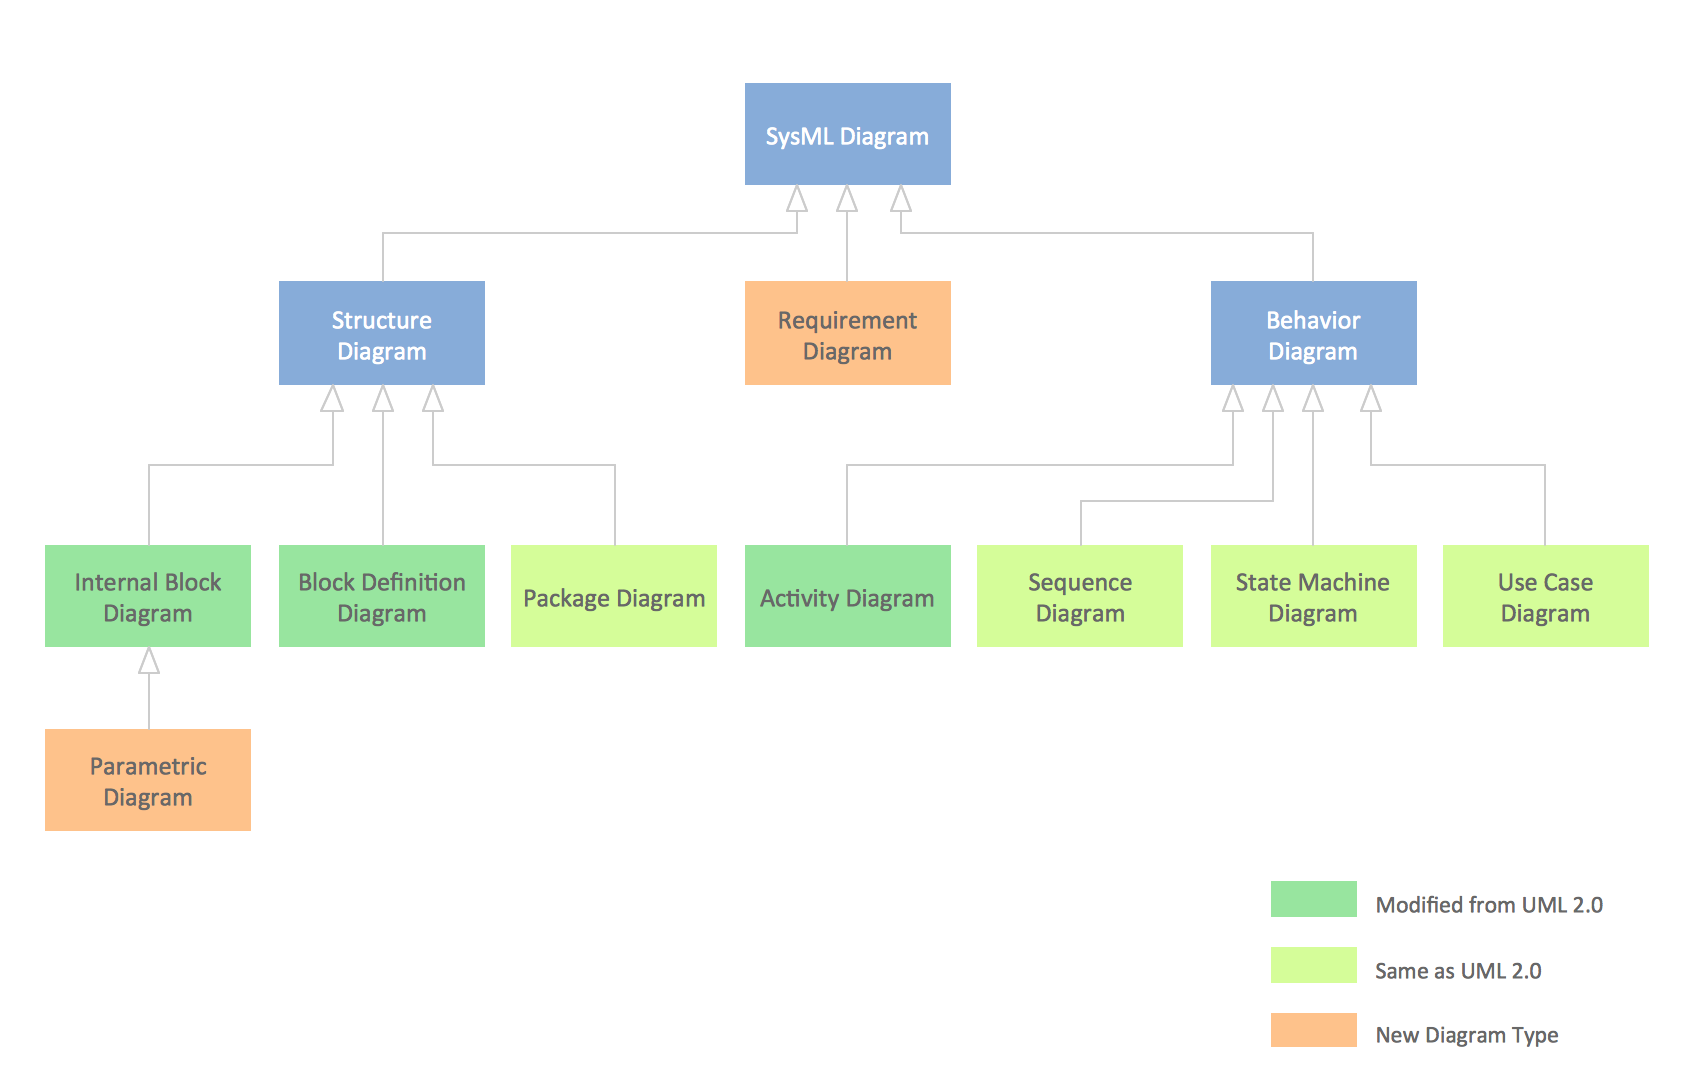 SYS ML Diagram - Taxonomy